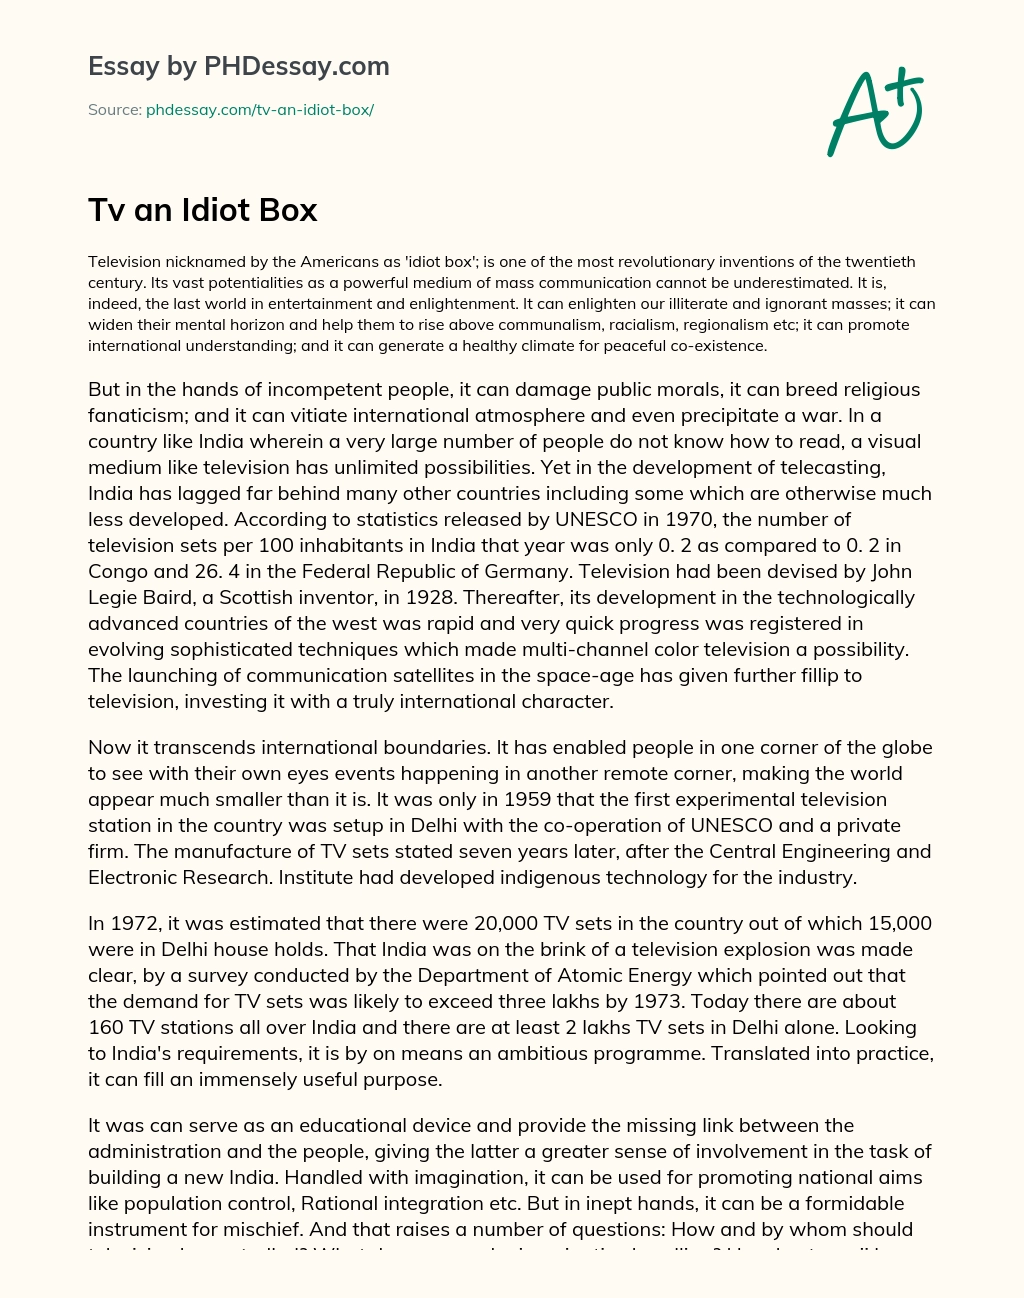 Tv an Idiot Box essay